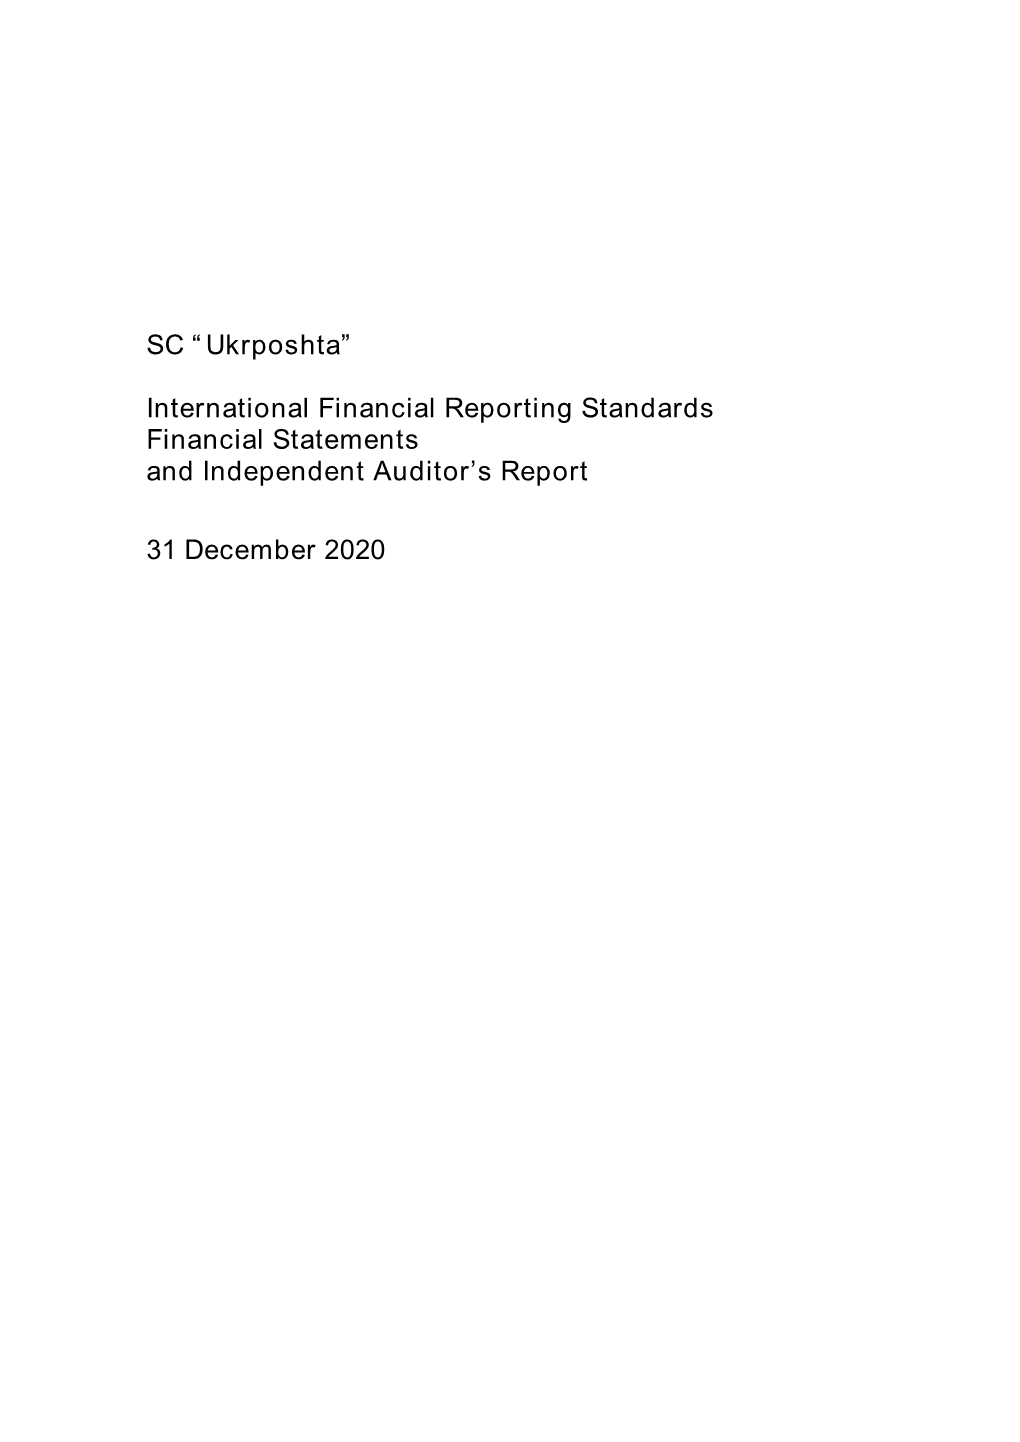 SC “Ukrposhta” International Financial Reporting Standards Financial